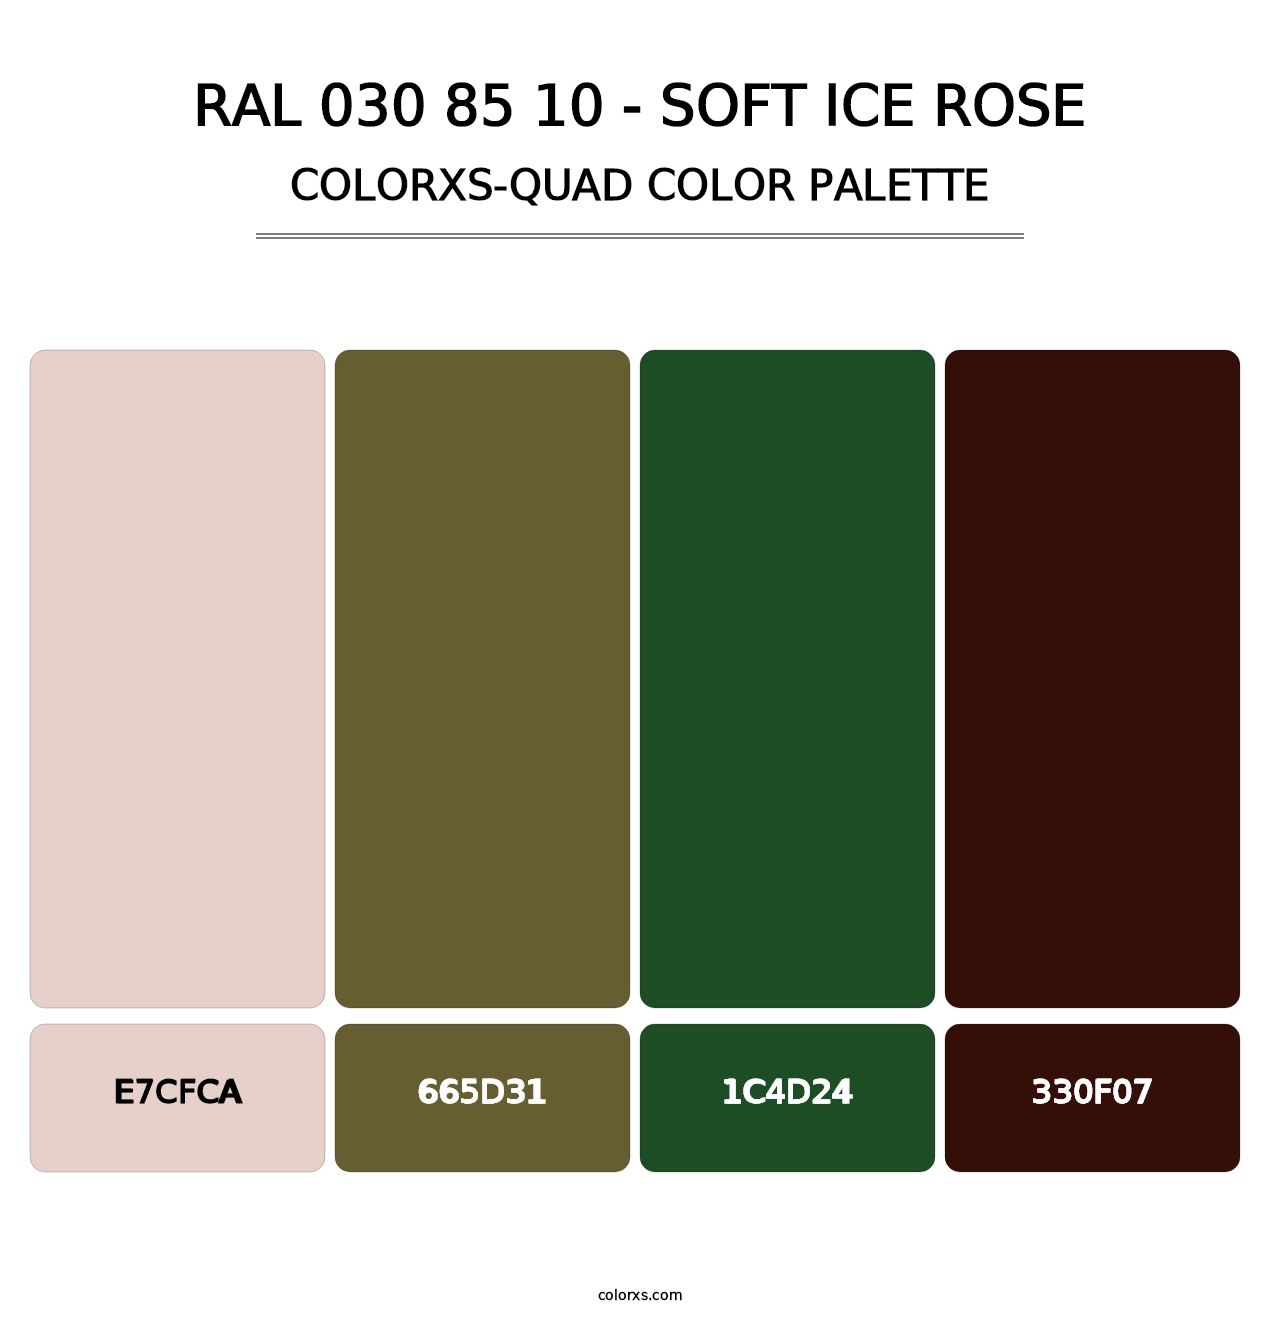 RAL 030 85 10 - Soft Ice Rose - Colorxs Quad Palette